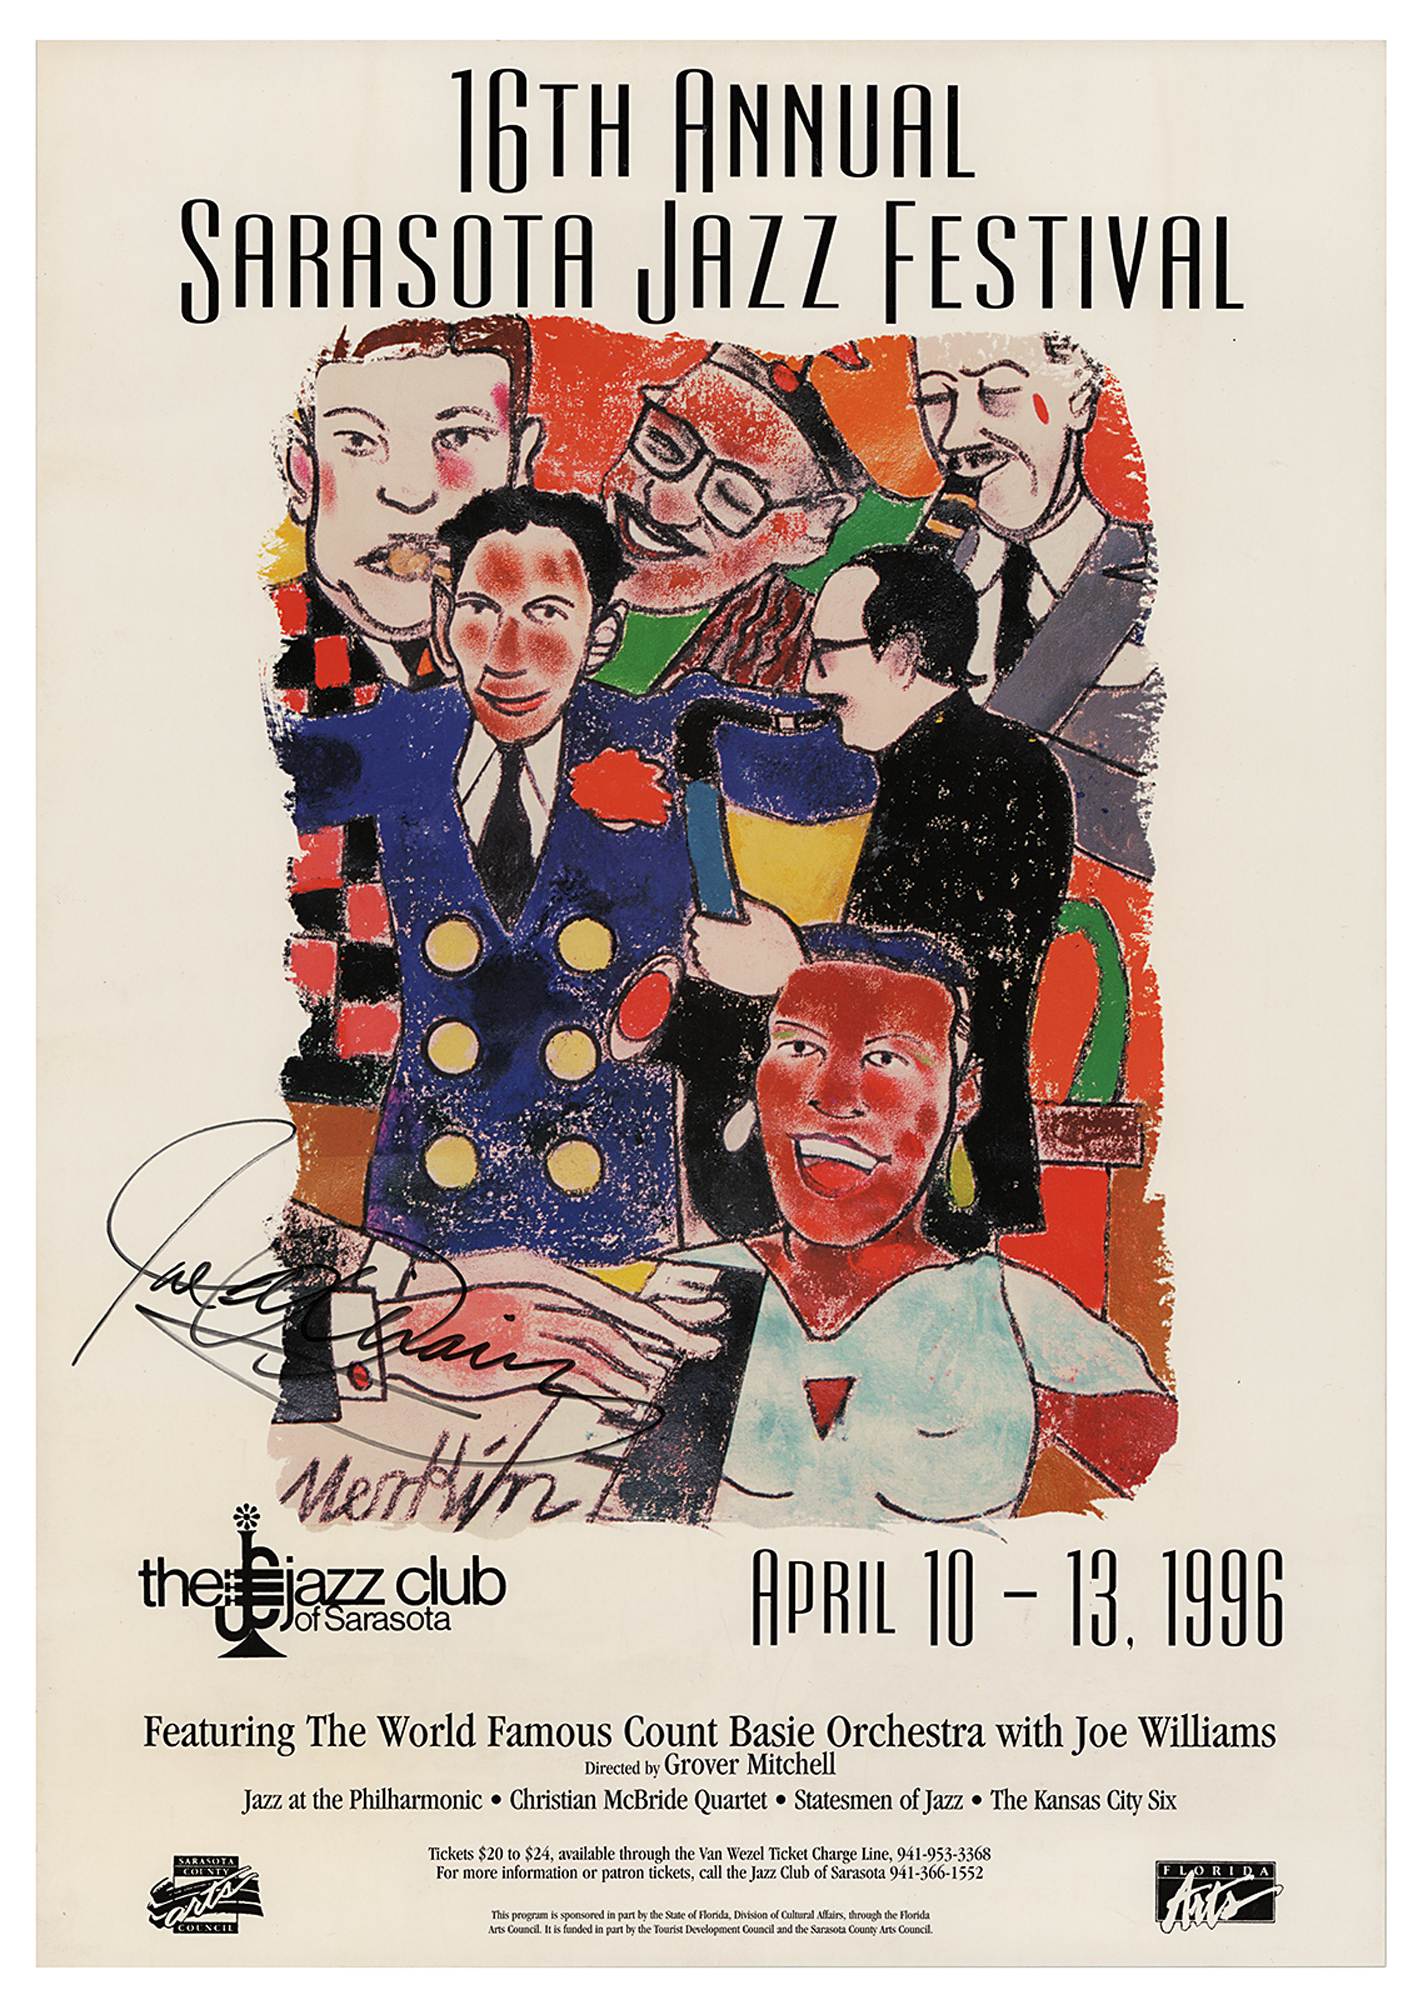 Lot #791 Sarasota Jazz Festival Poster Signed by Joe Williams - Image 1